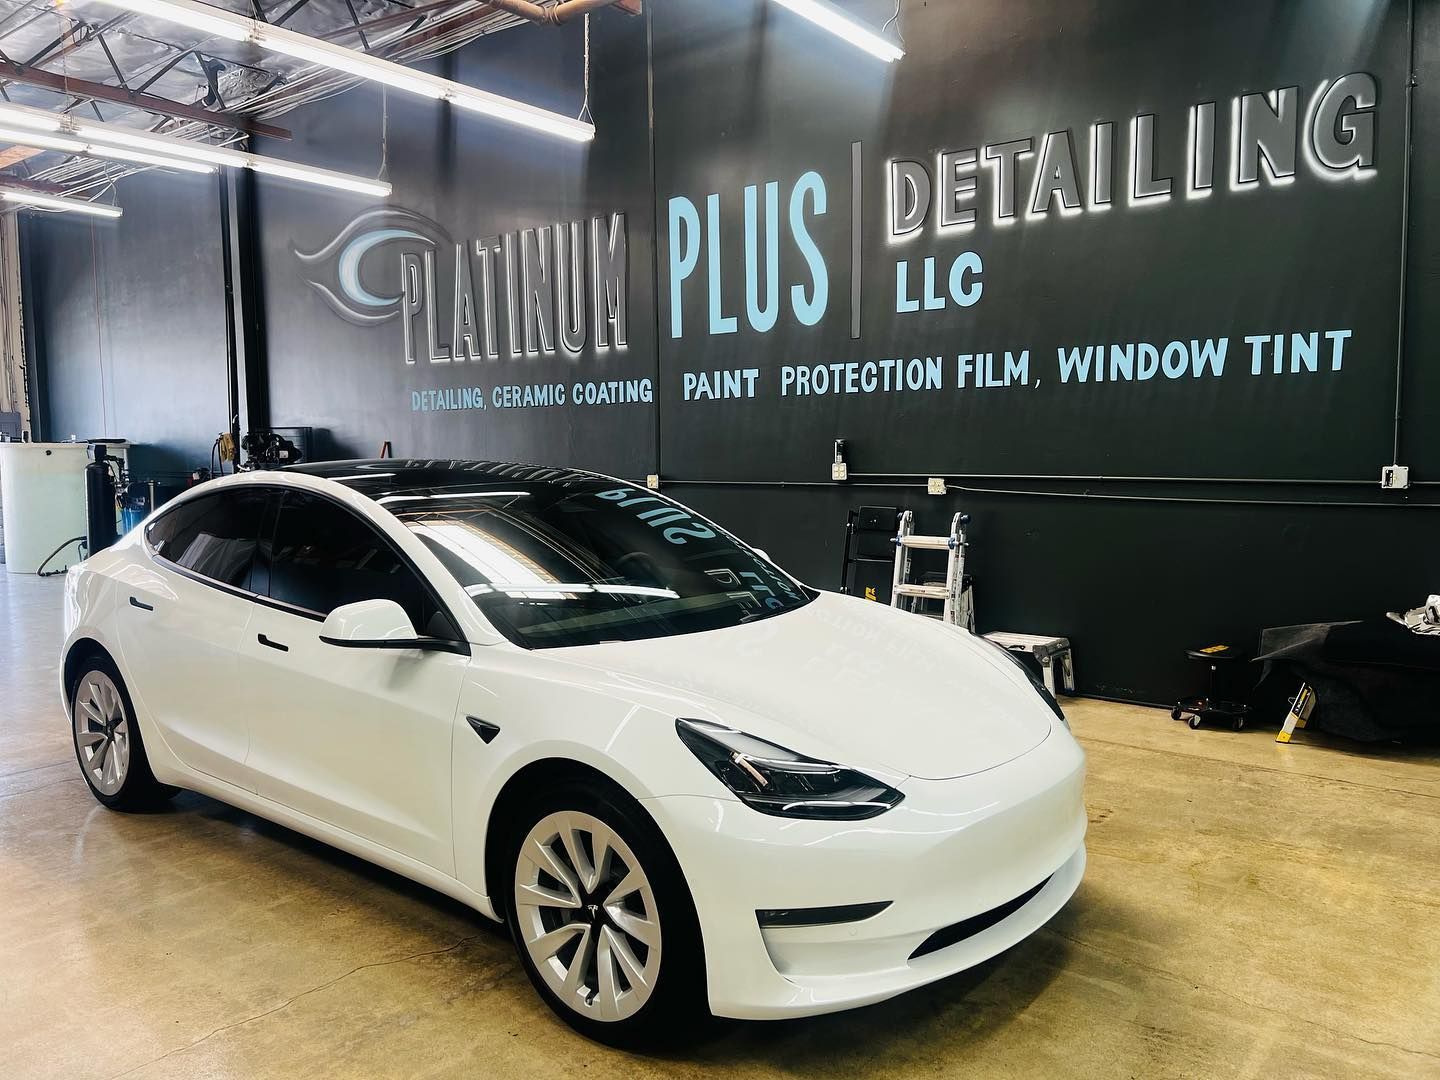 Tesla paint protection film benefits